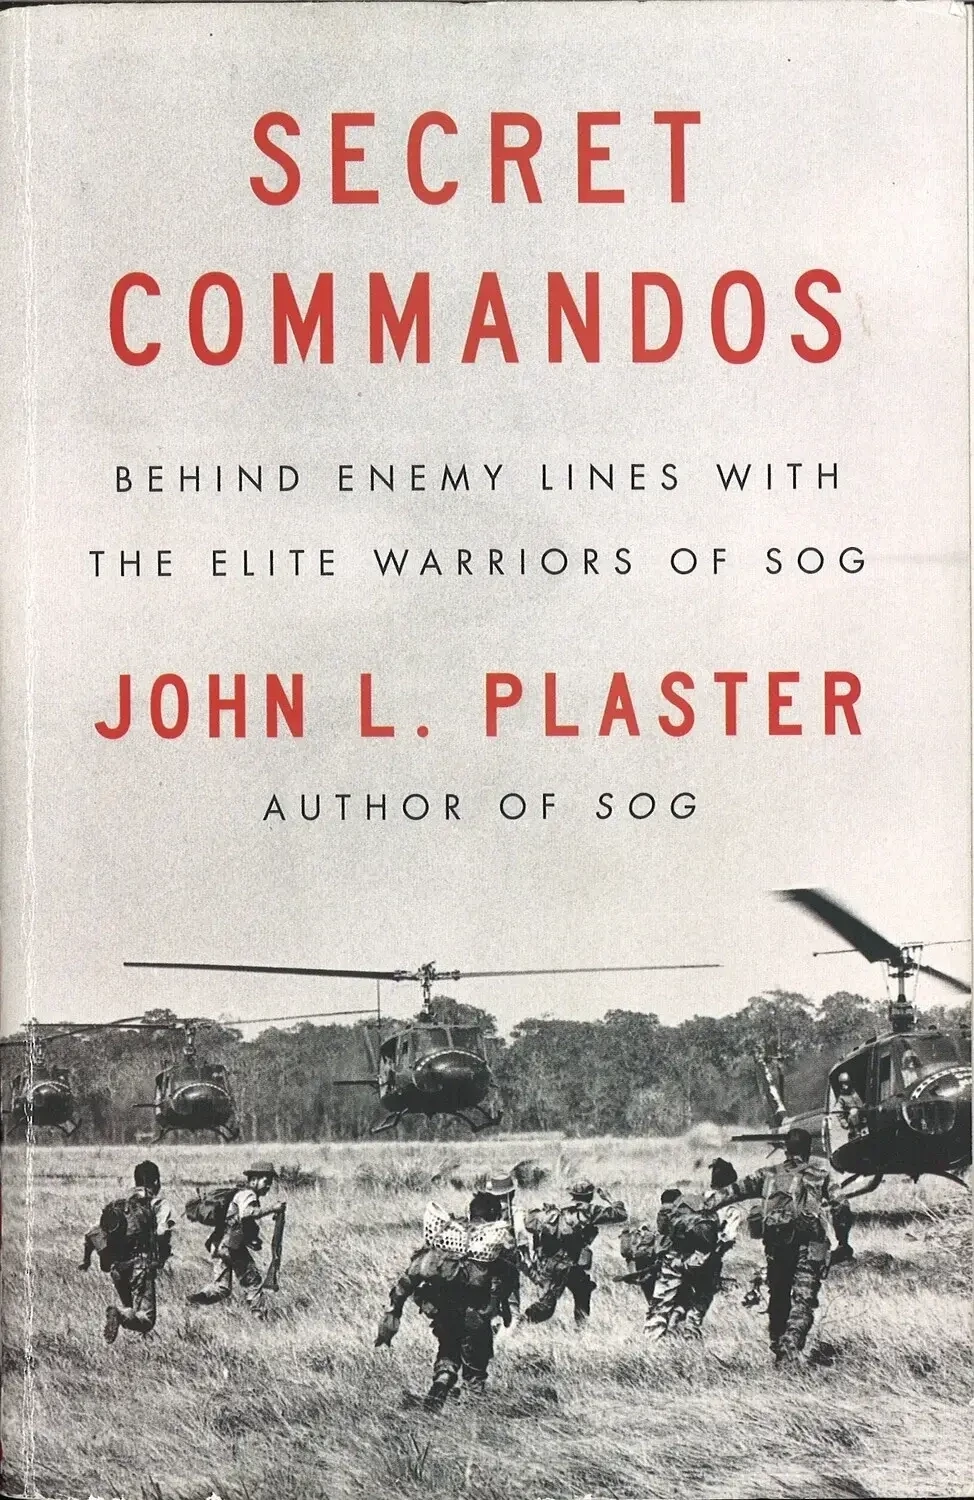 Secret Commandos by John L. Plaster